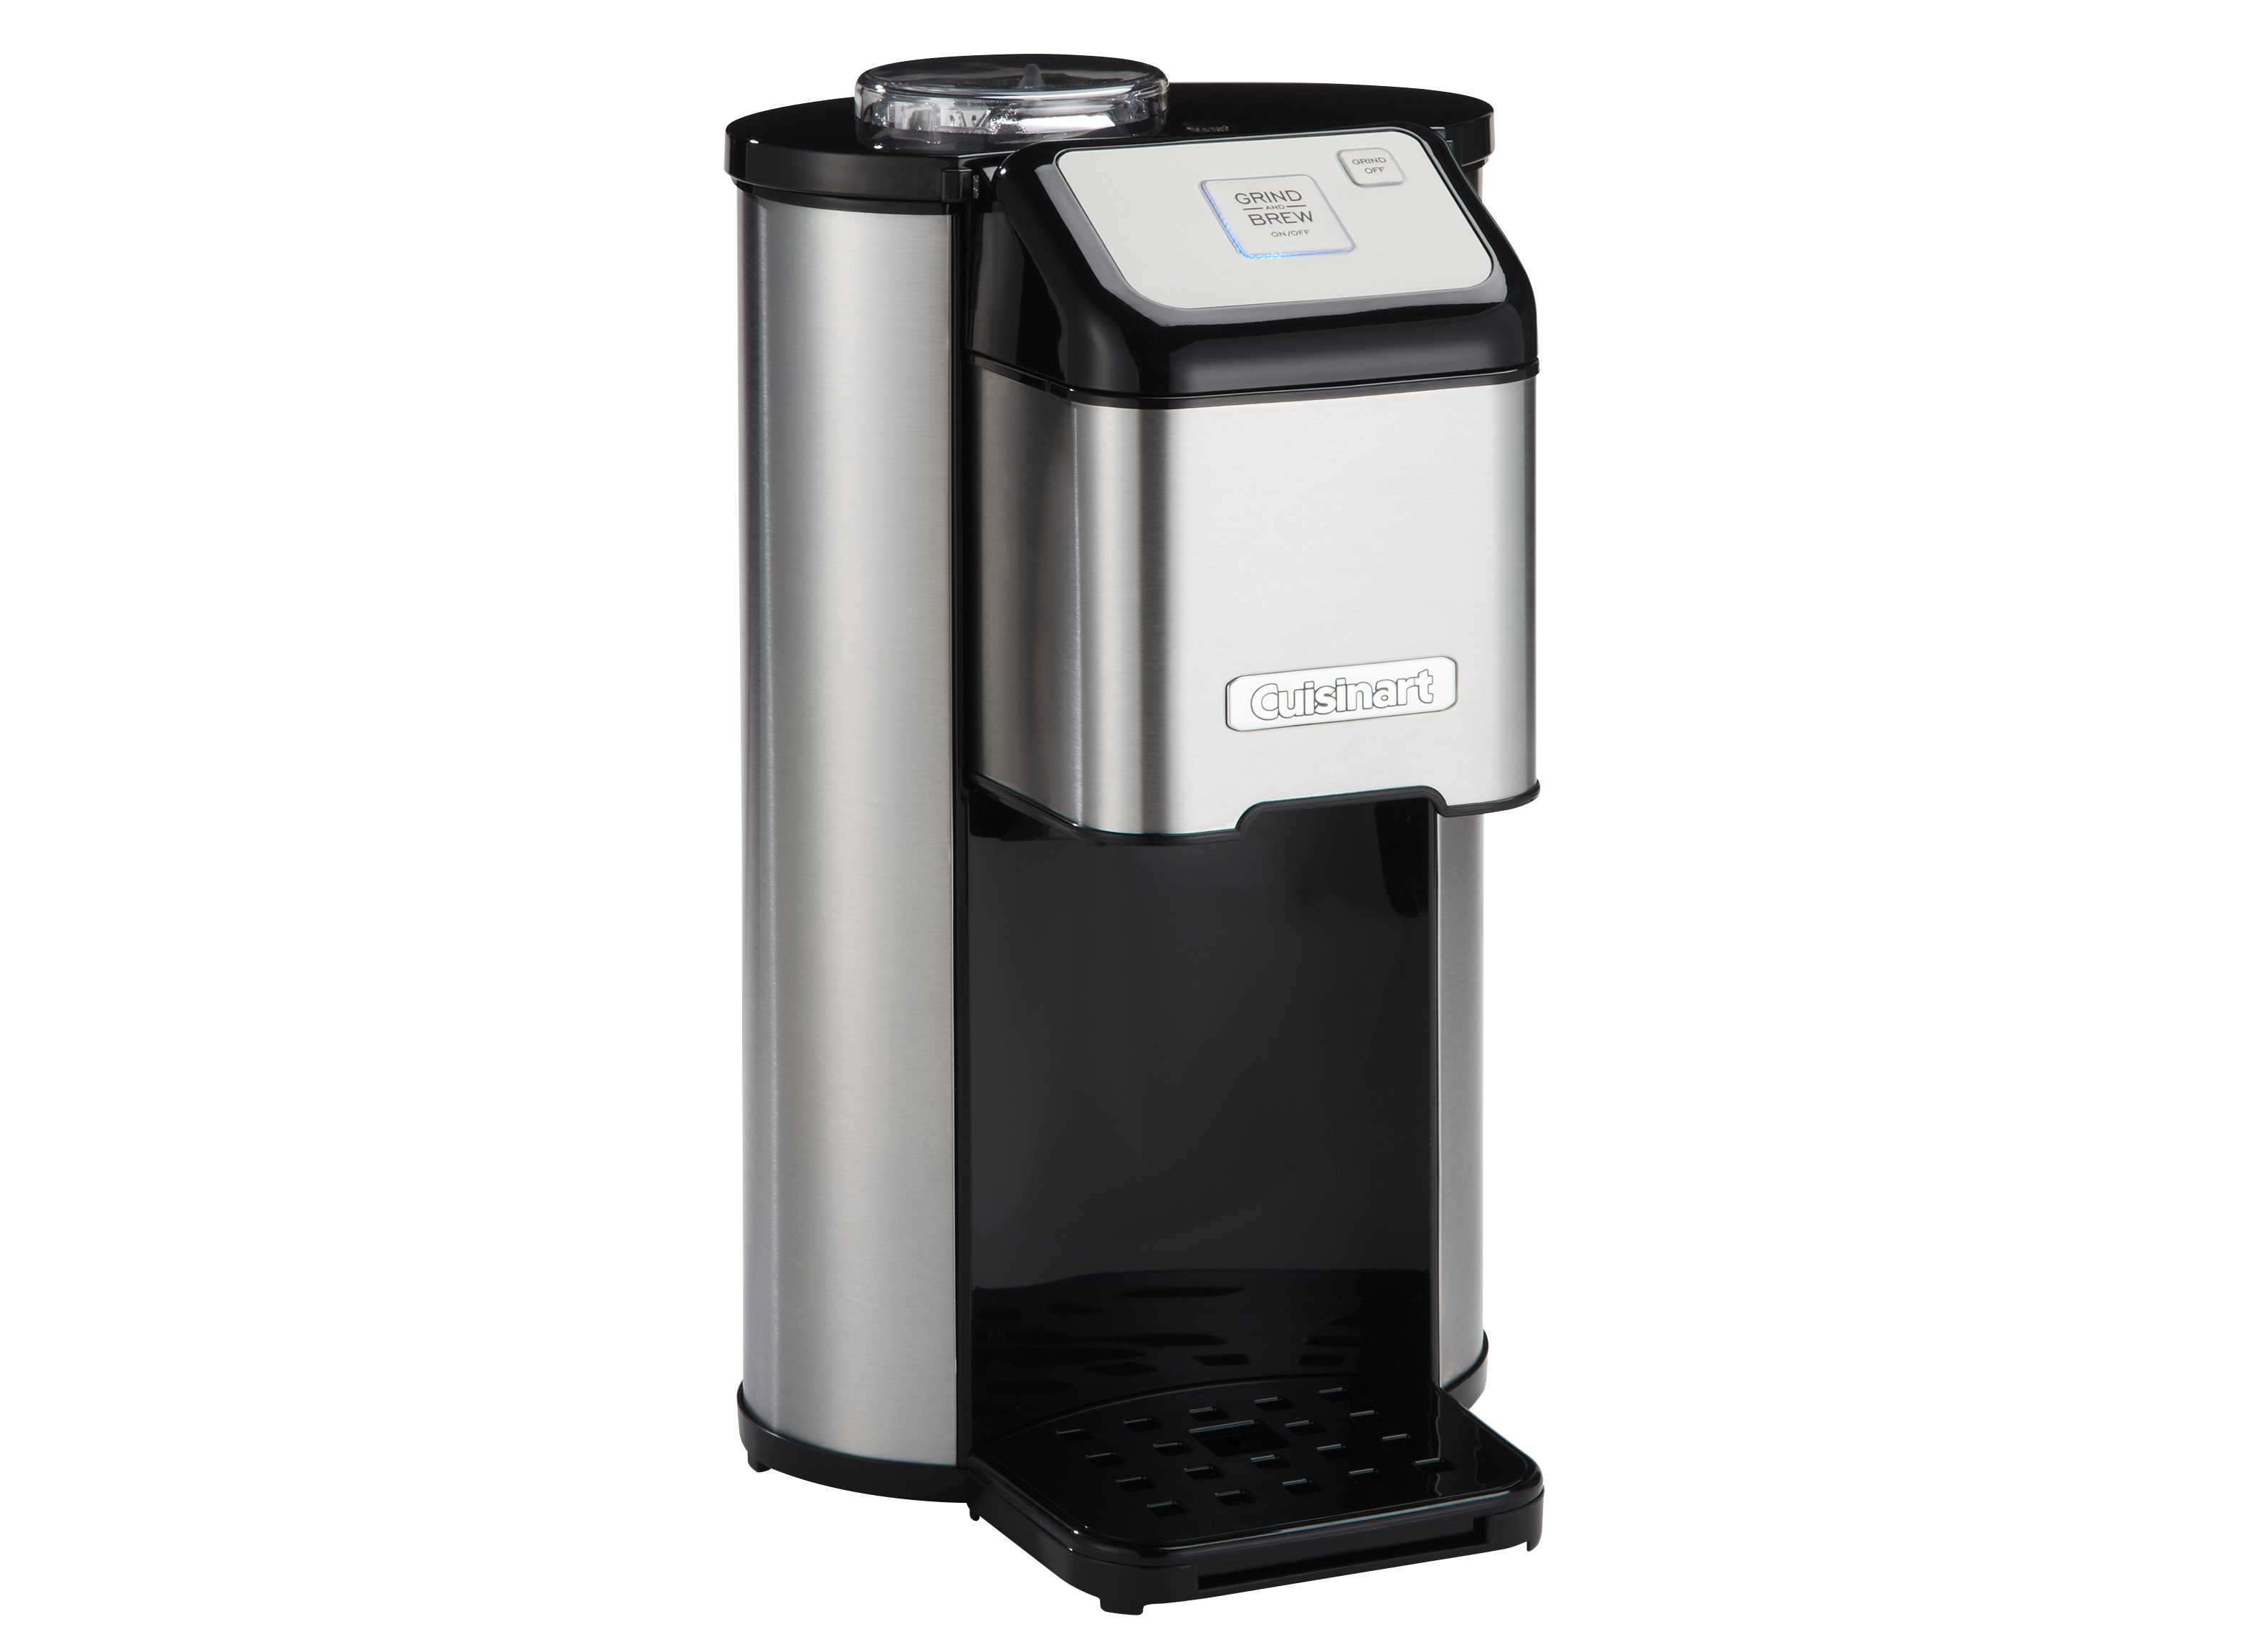 Cuisinart Grind & Brew Single Serve DGB-1 Coffee Maker - Consumer Reports